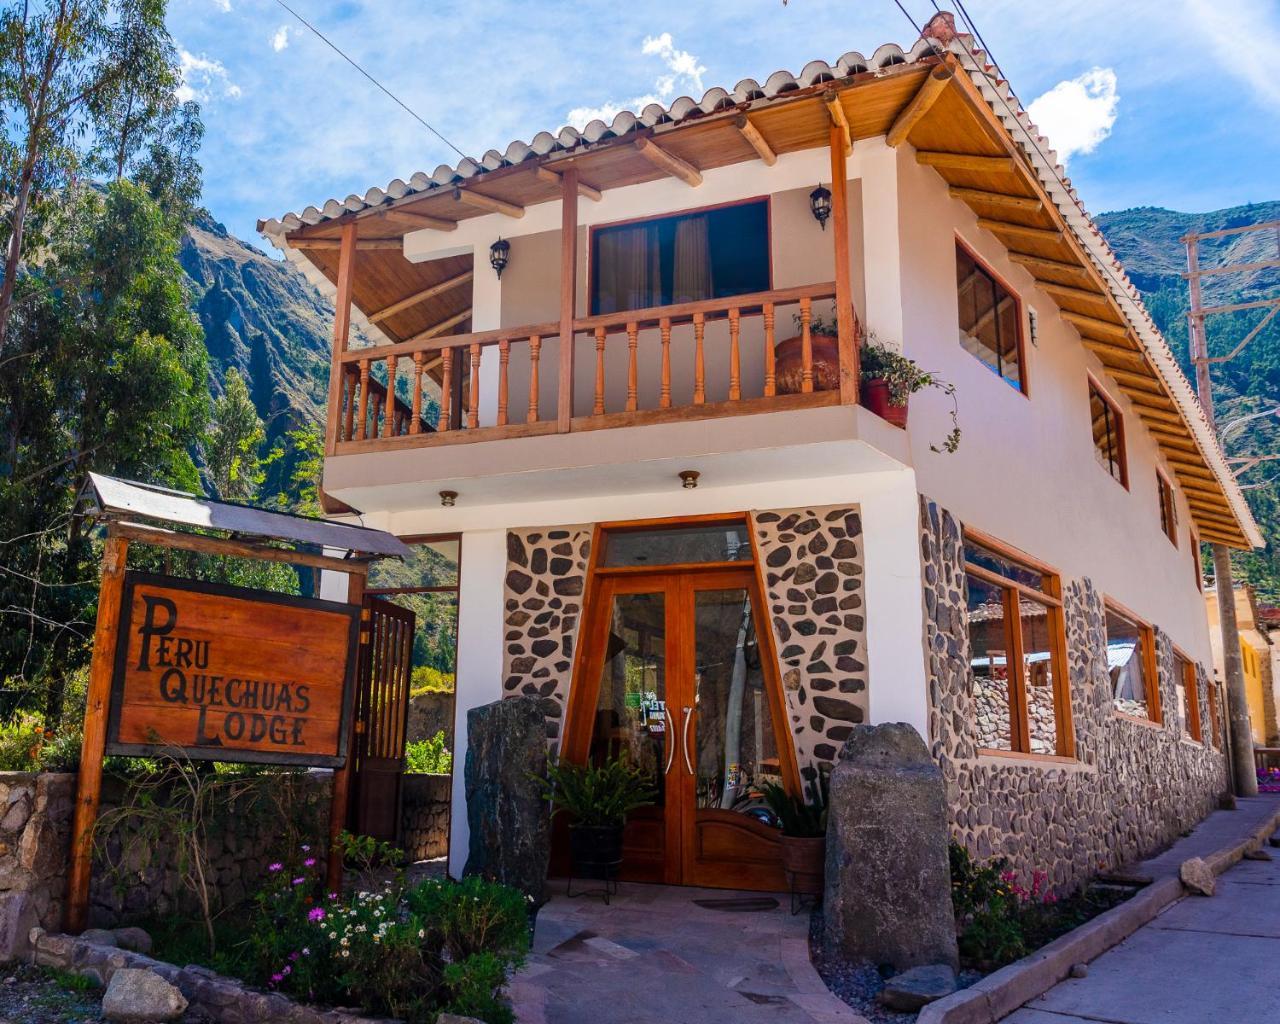 Peru Quechua'S Lodge Оллантайтамбо Экстерьер фото